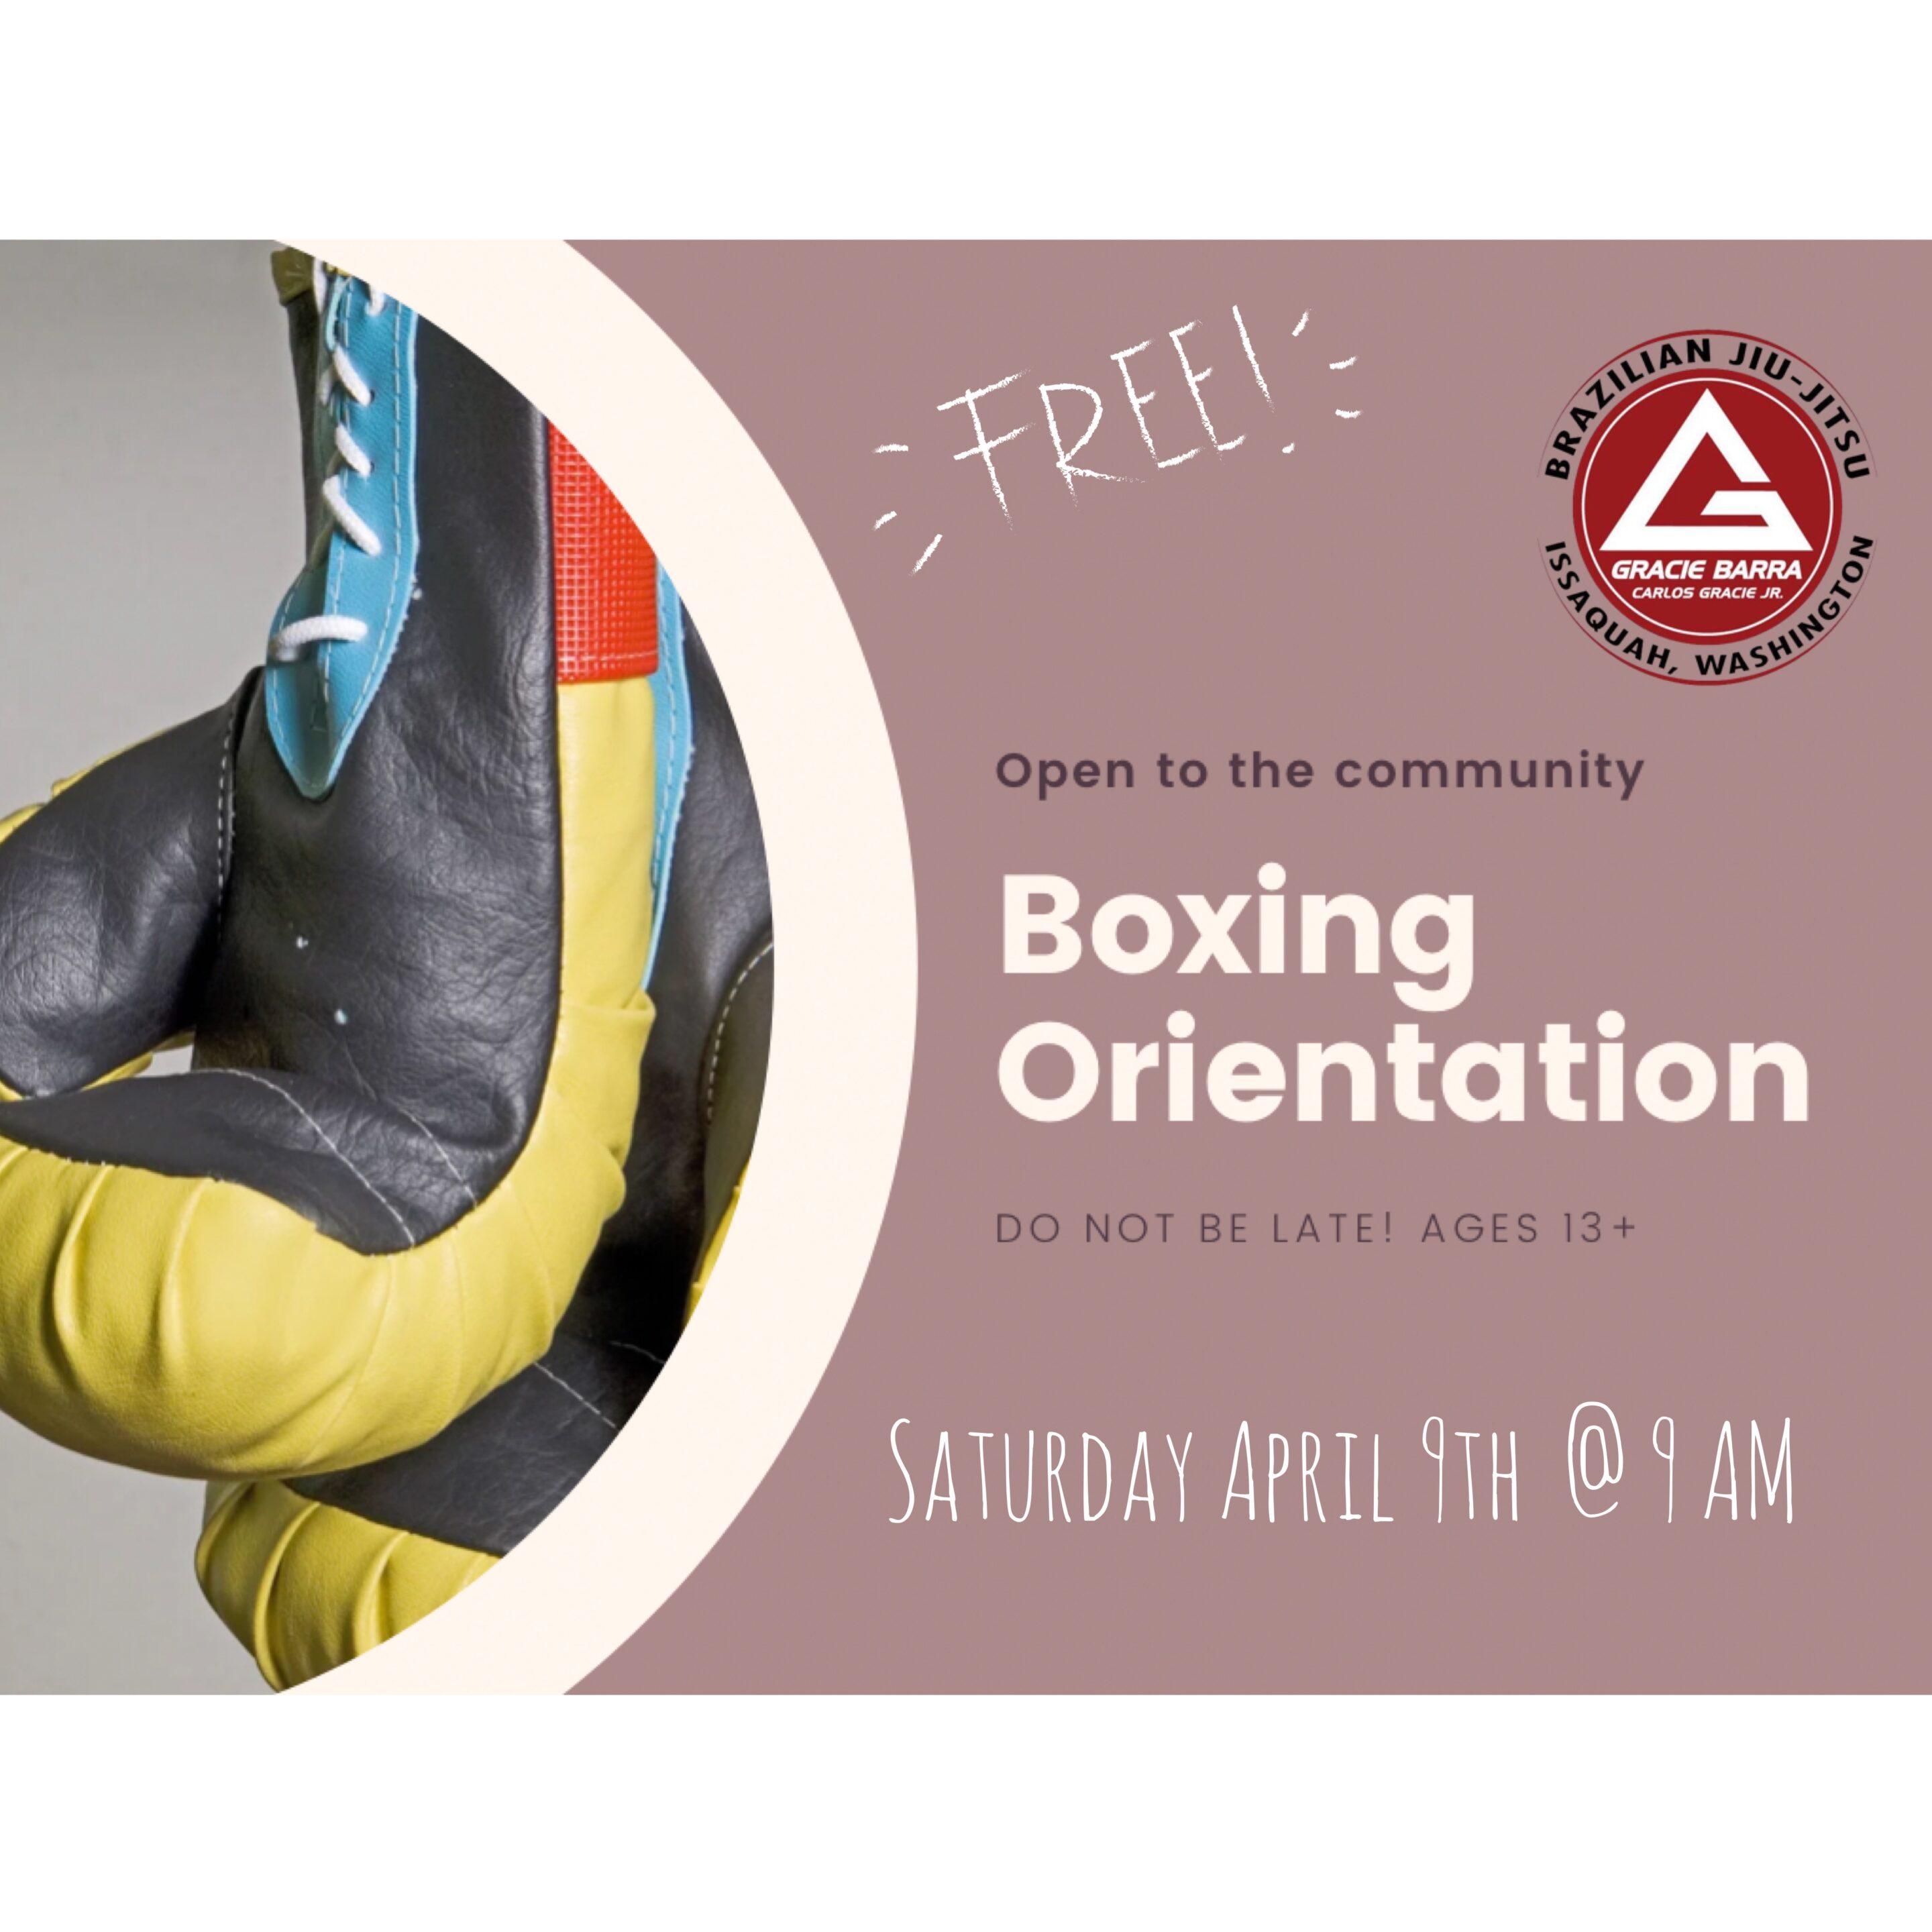 Next Free Boxing Orientation: Saturday, April 9